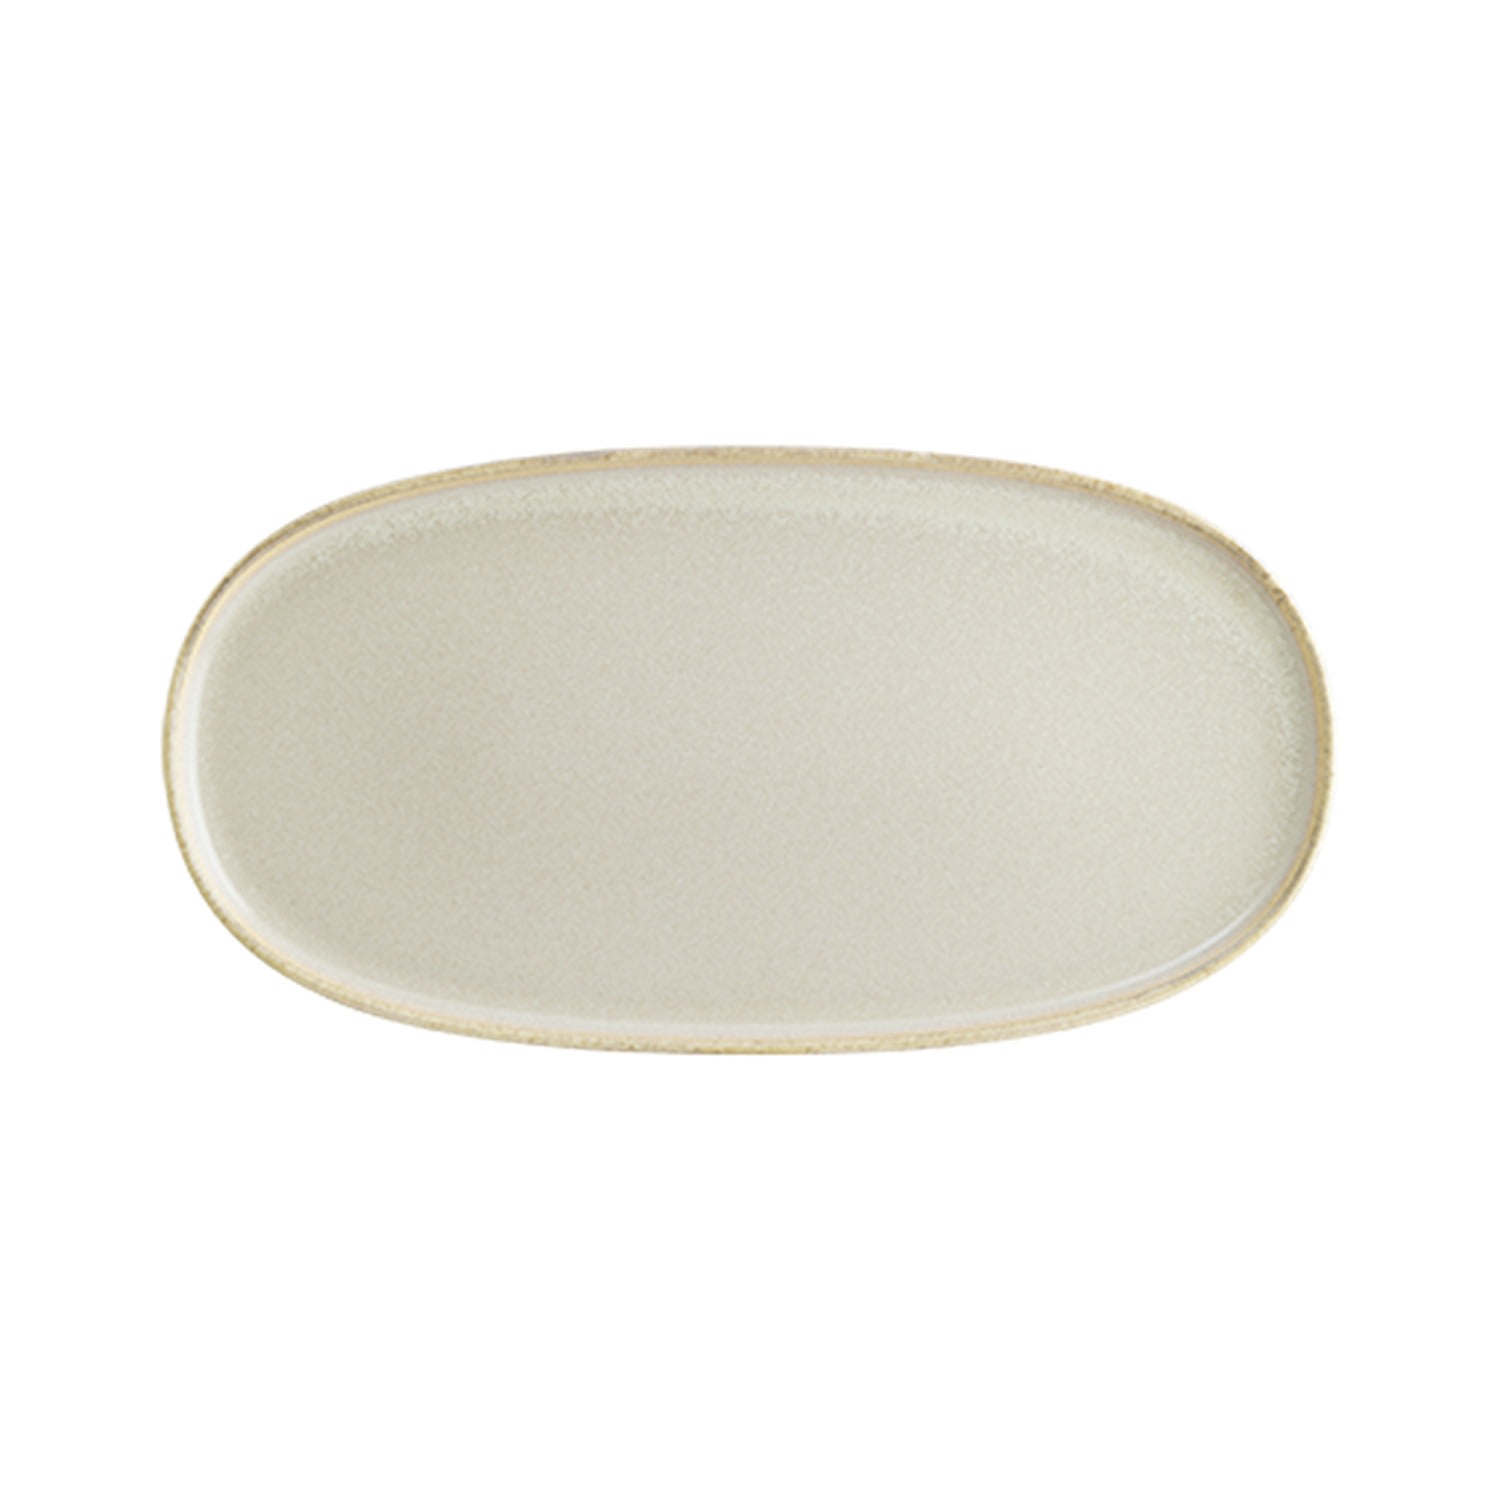 Sand Porcelain Platter Beige Oval 11.75" X 6.25" X 0.75" One Size Turgla Home